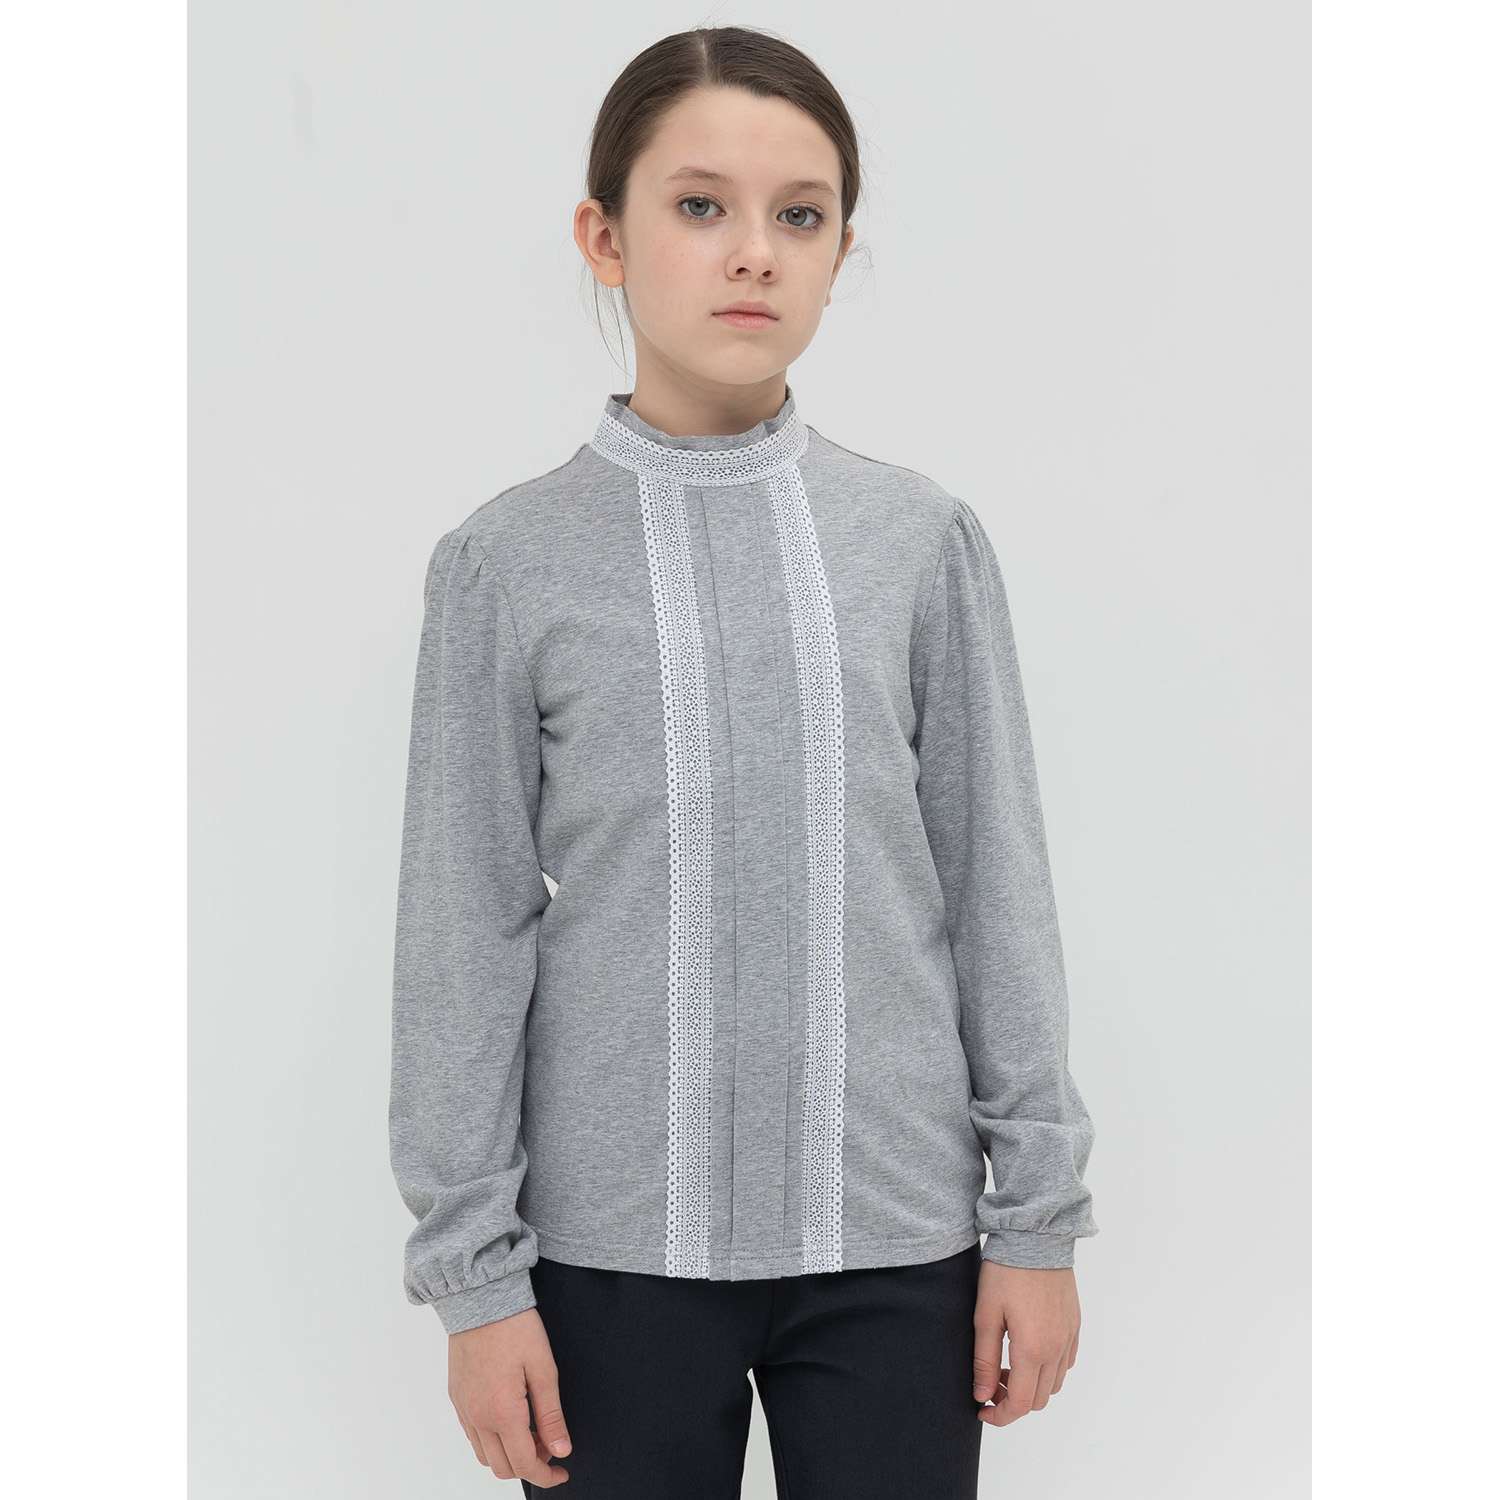 Блузка PELICAN GFJS8139/Серый(40) - фото 1